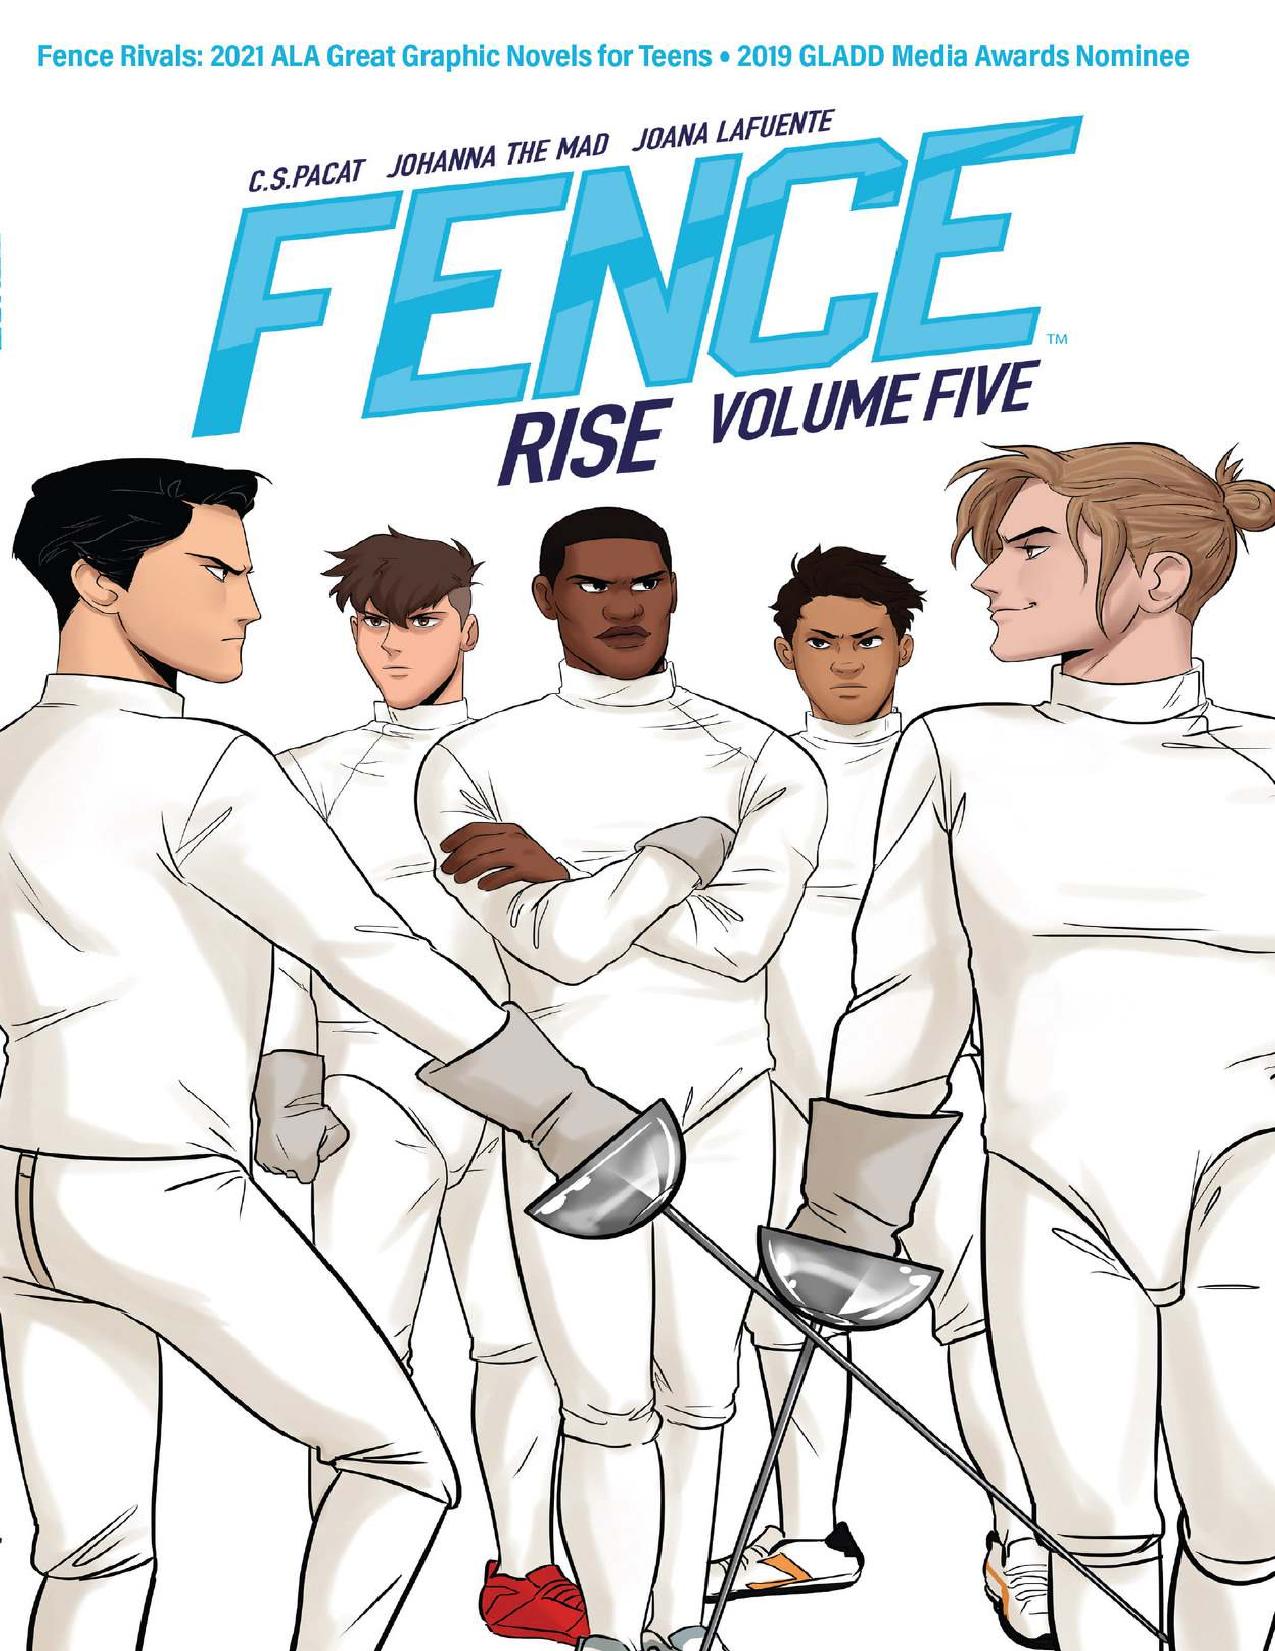 Fence, Vol. 5 Rise